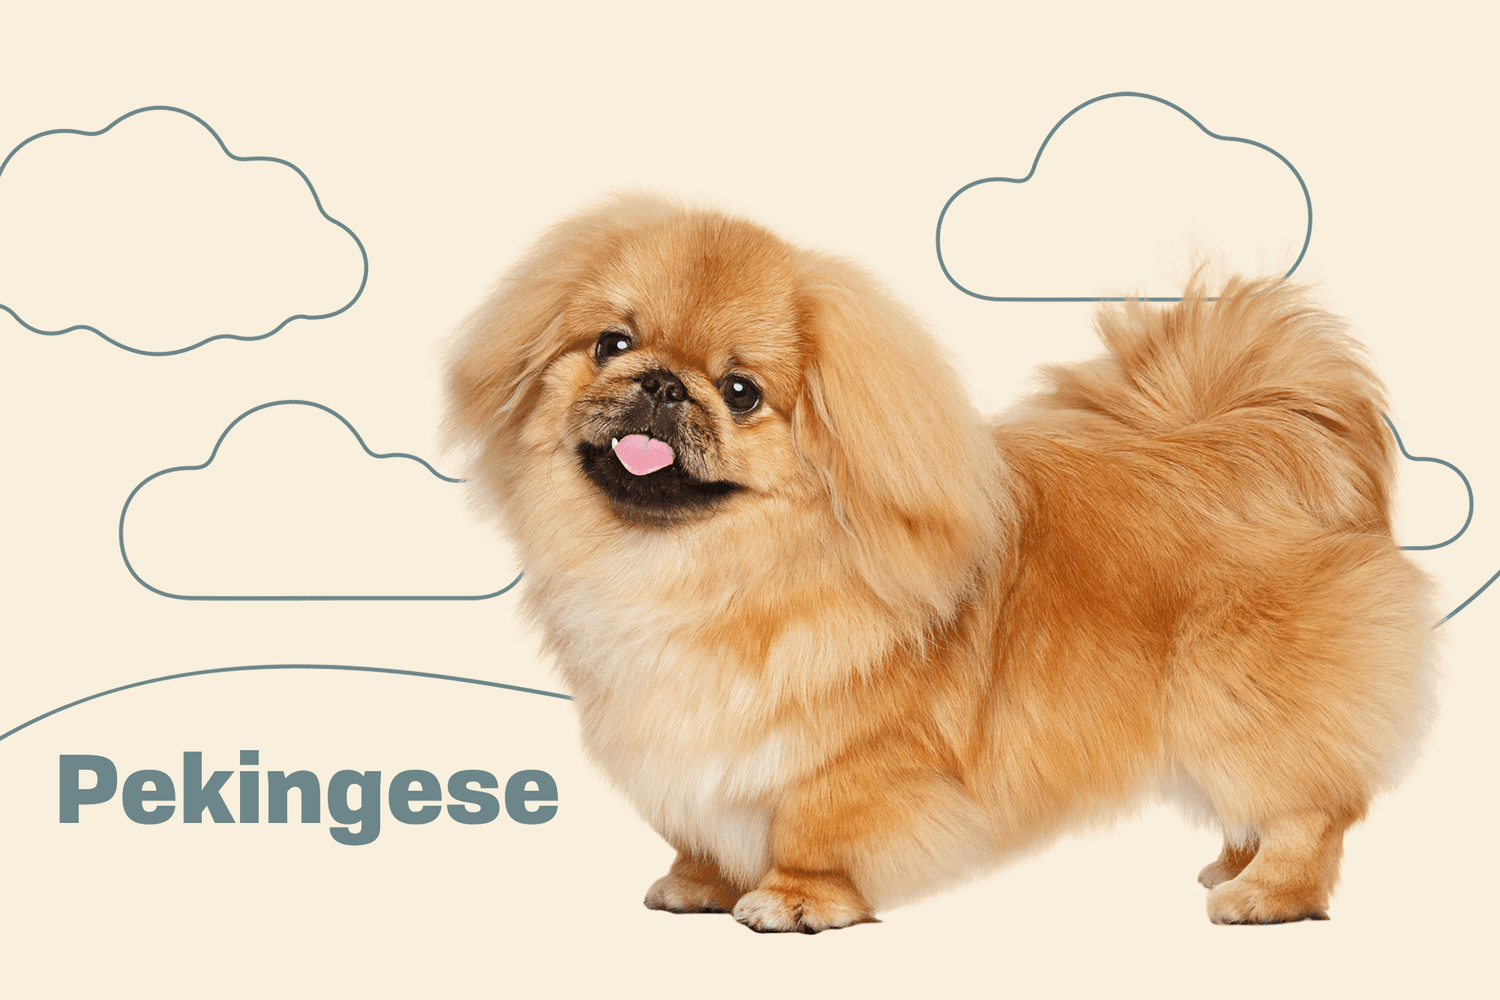 Pekingese Dog Breed Information & Characteristics | Daily Paws